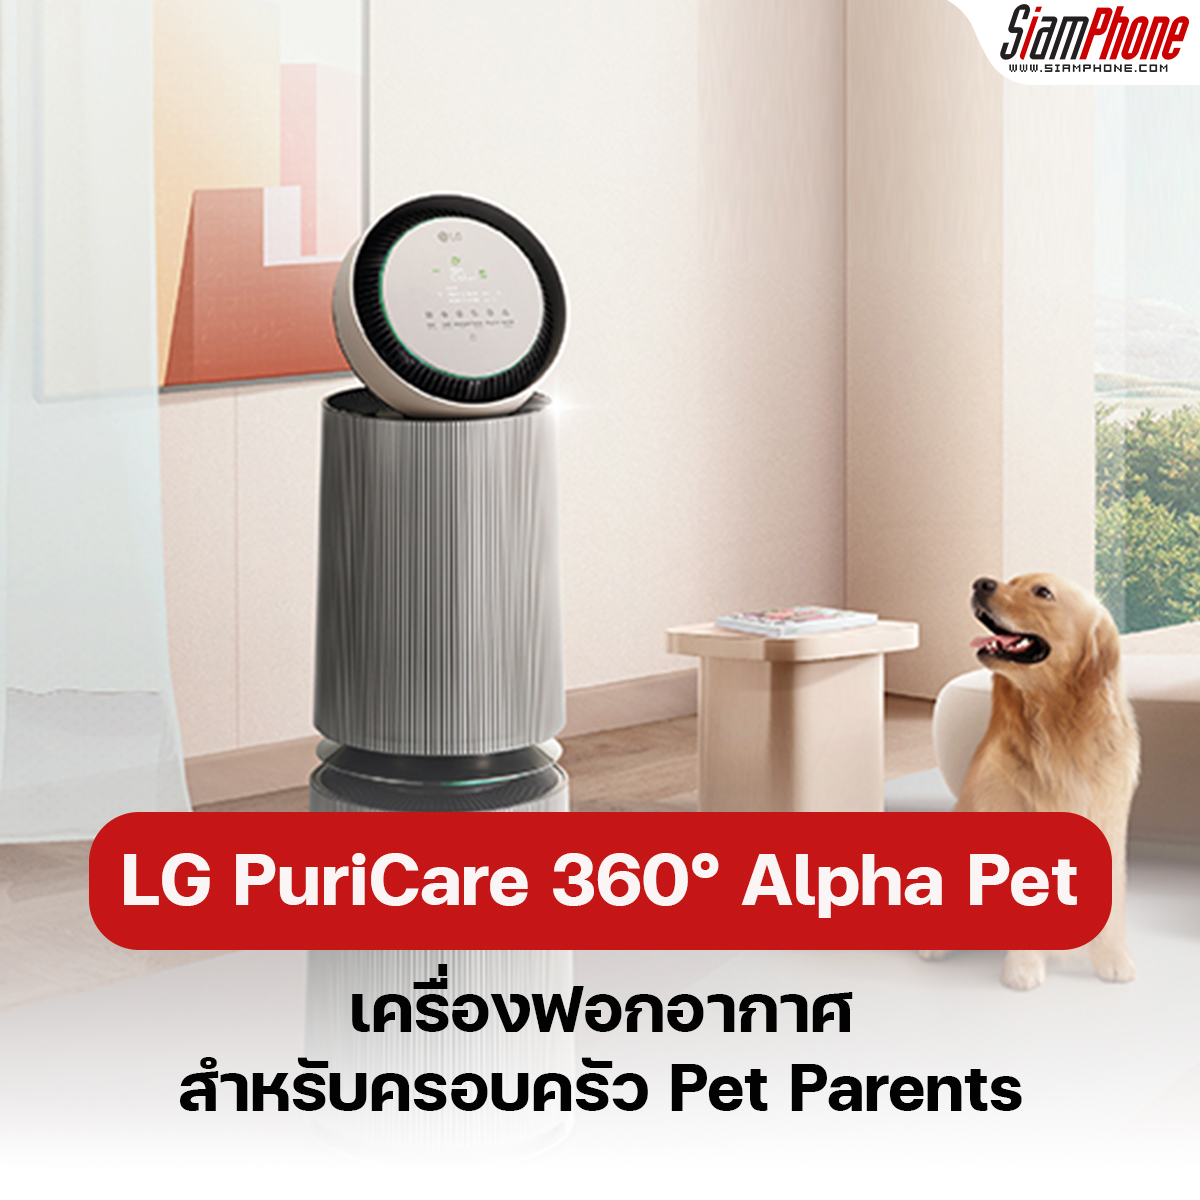 LG PuriCare 360° Alpha Pet เครื่องฟอกอากาศ สำหรับเหล่า Pet Parents